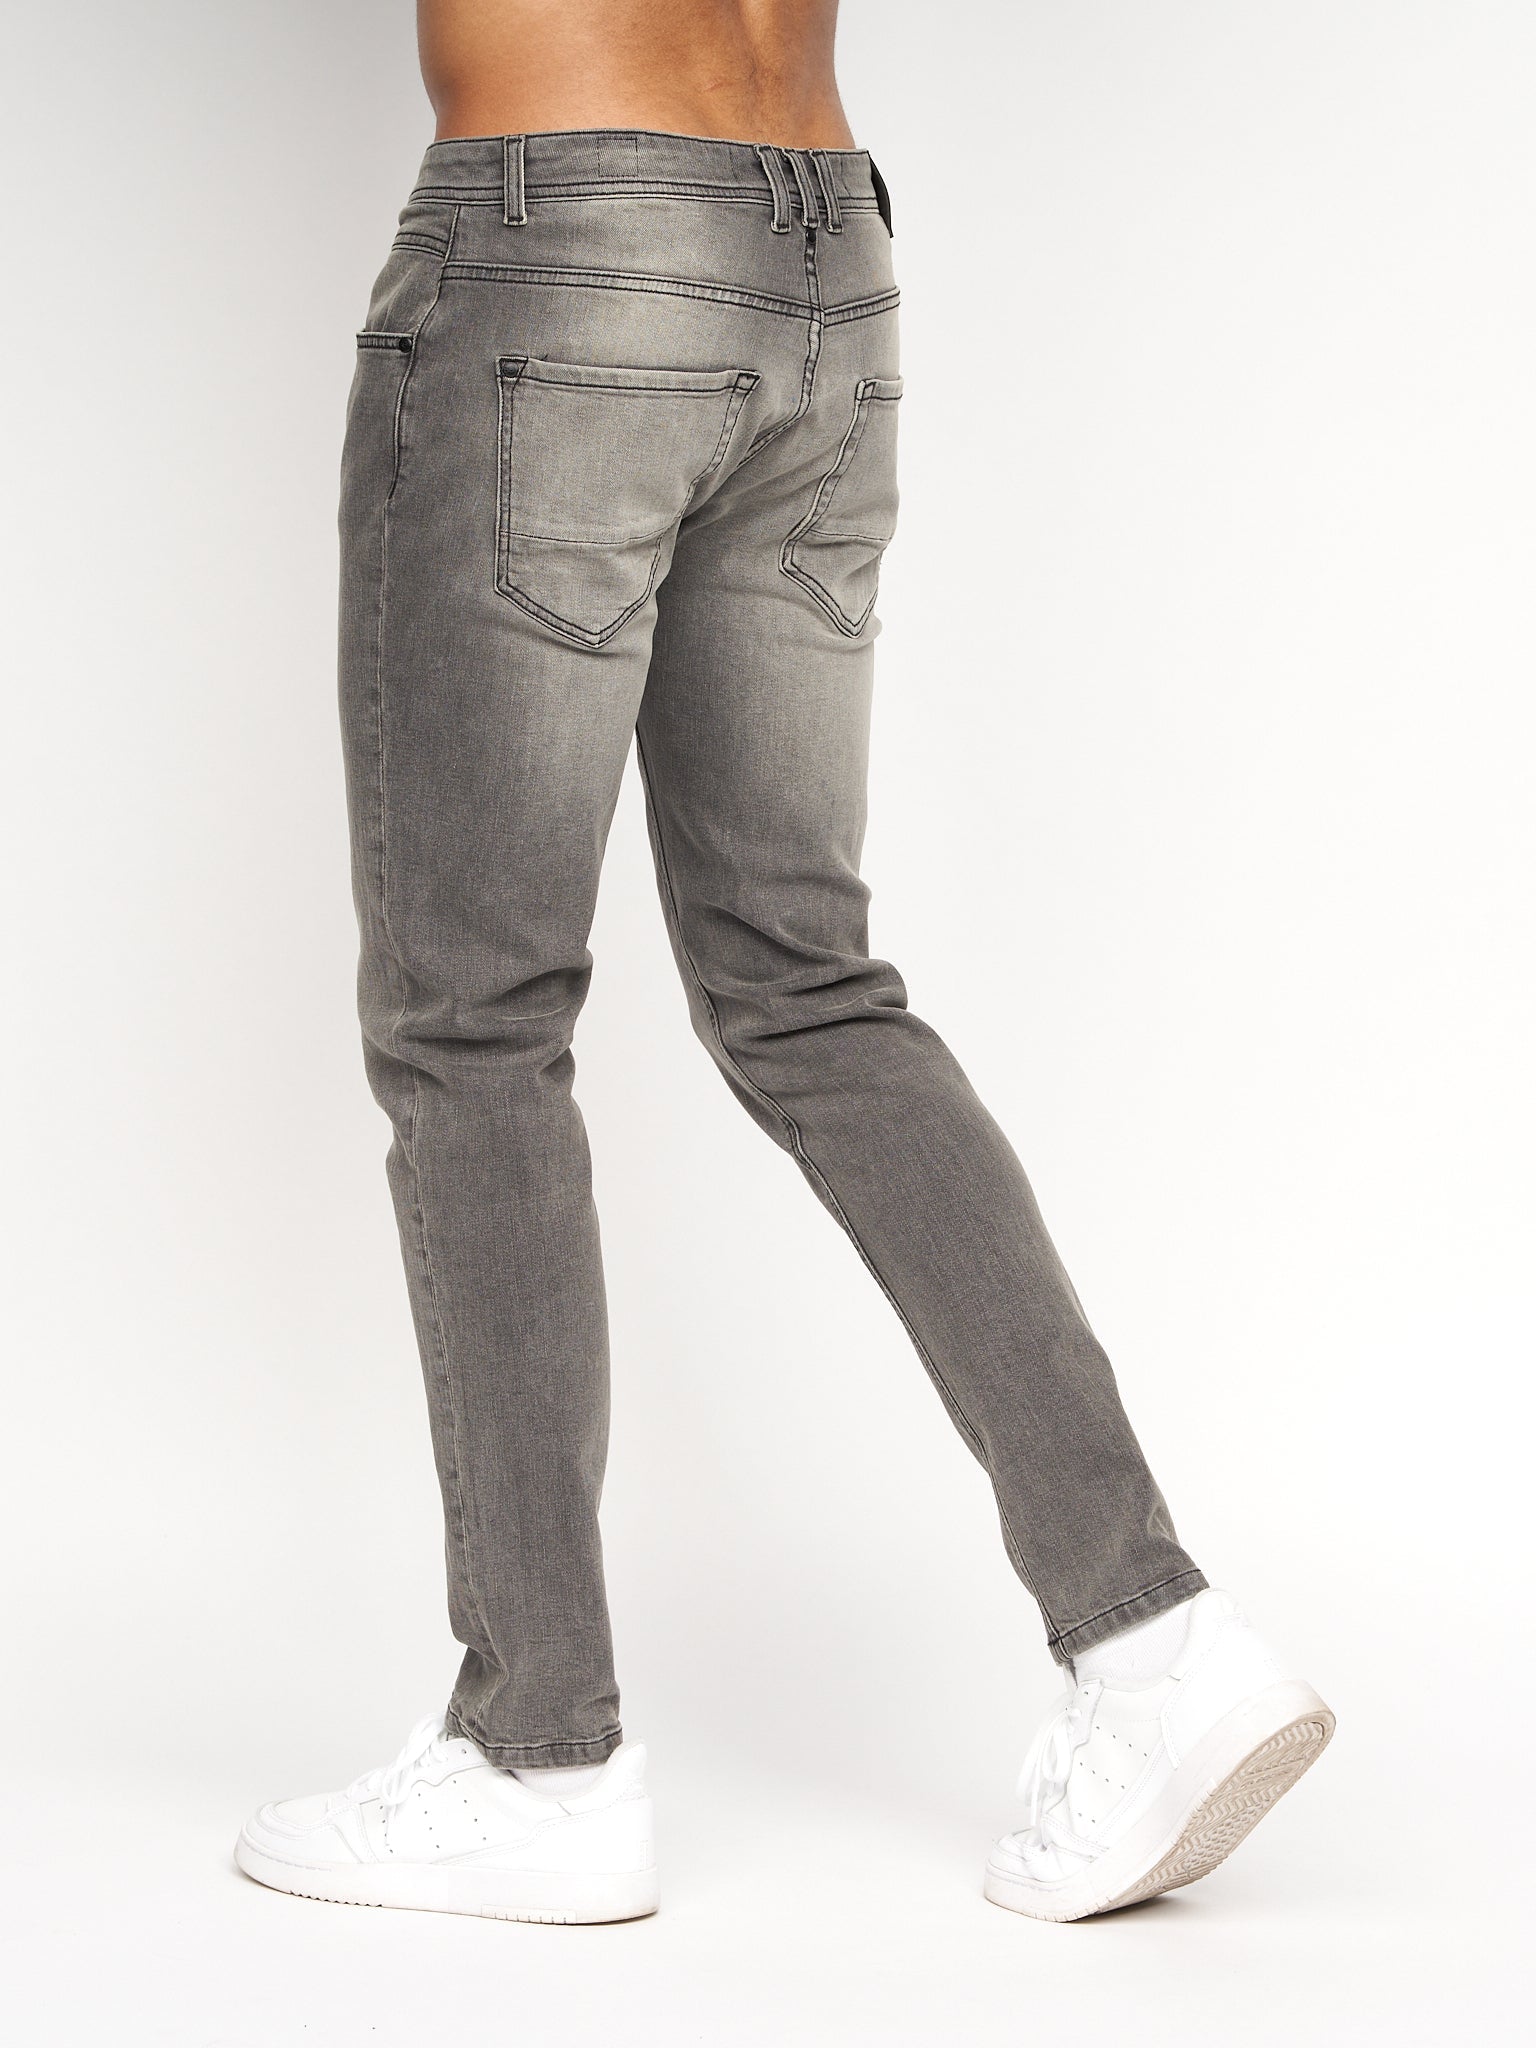 Kozzak washed super skinny fit grey jeans - G3-MJE4626